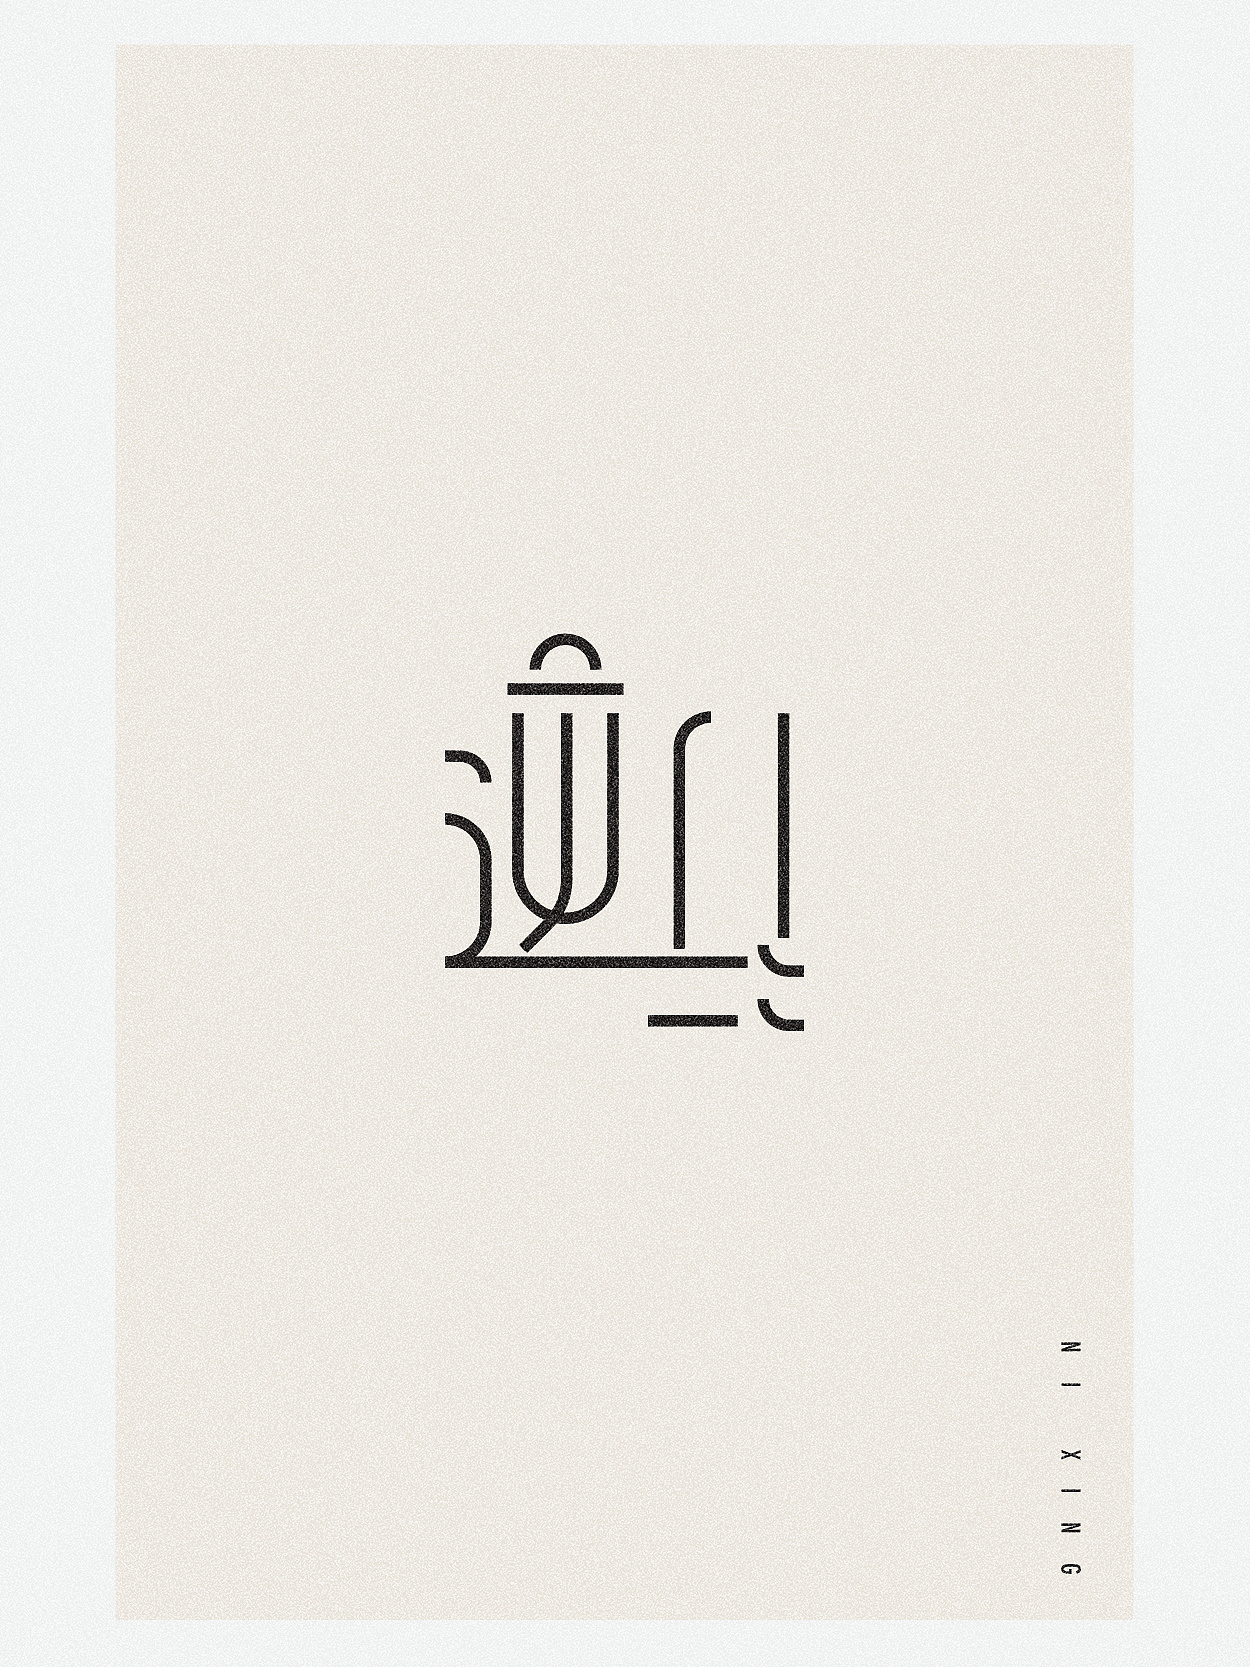 19P Creative Chinese font logo design scheme #.147